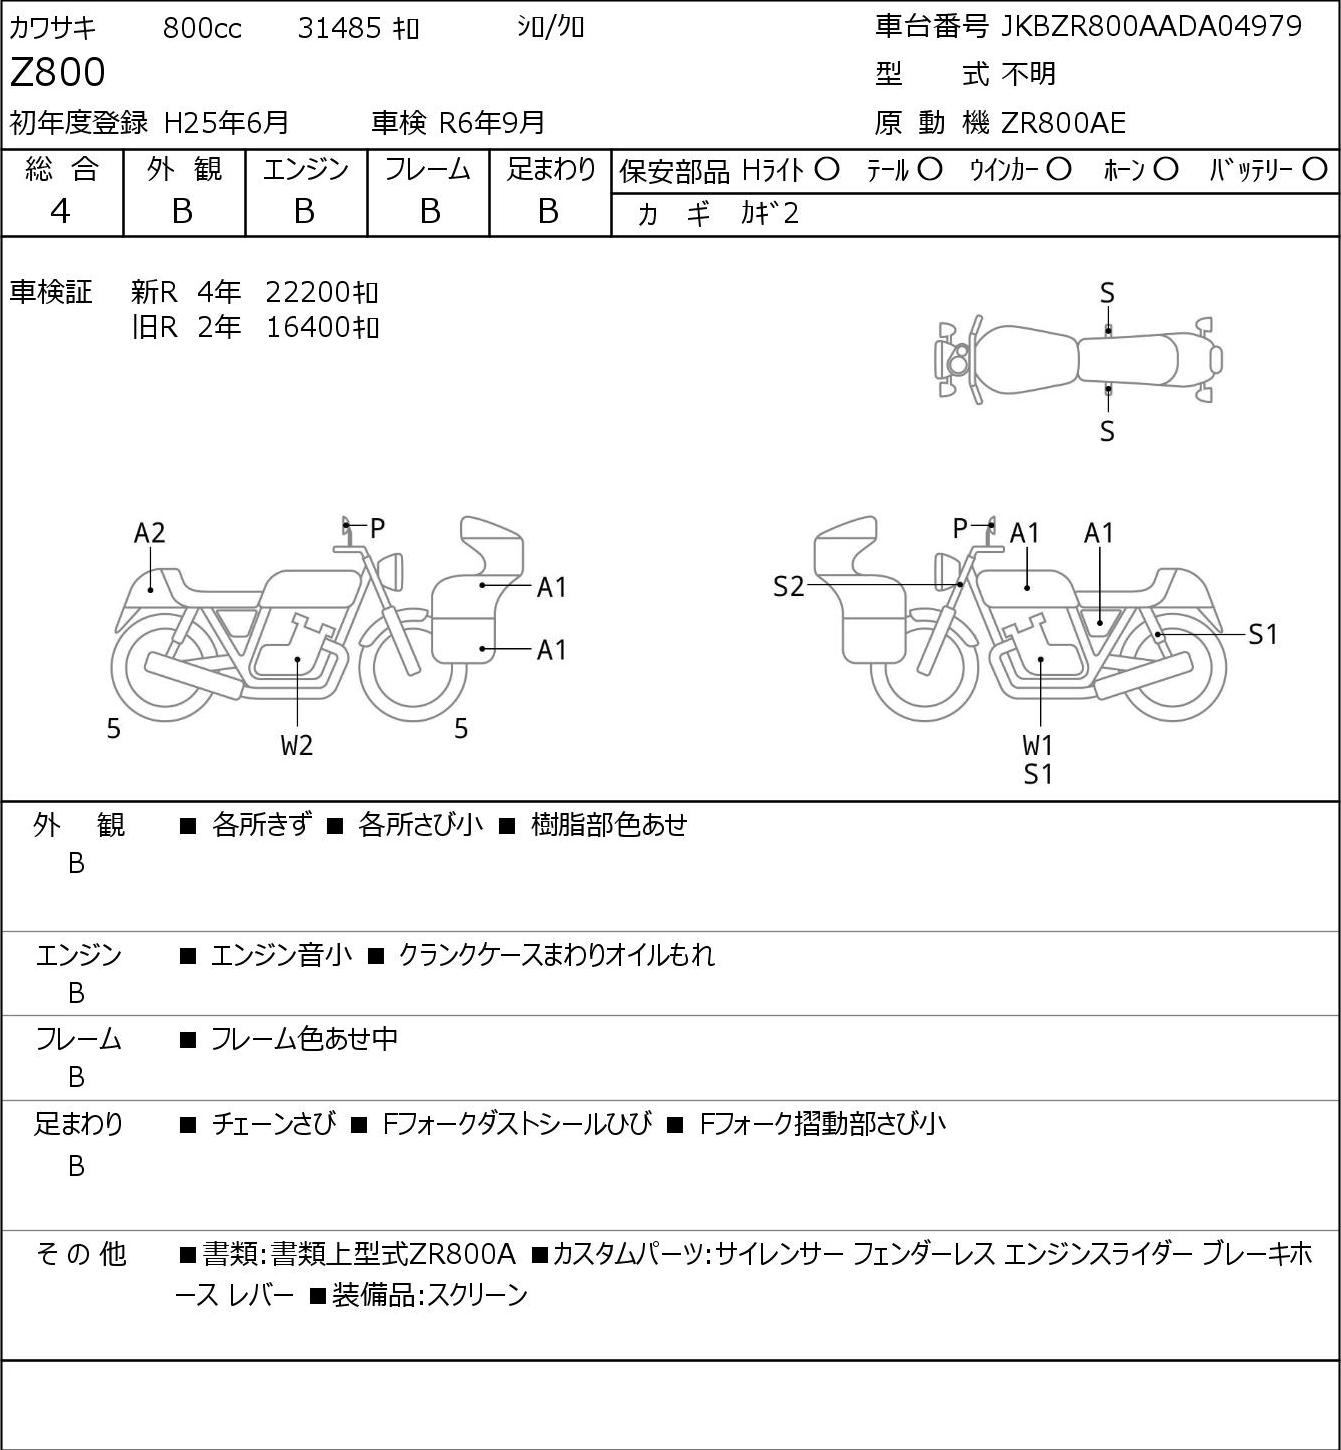 Kawasaki Z800 ZR800A - купить недорого